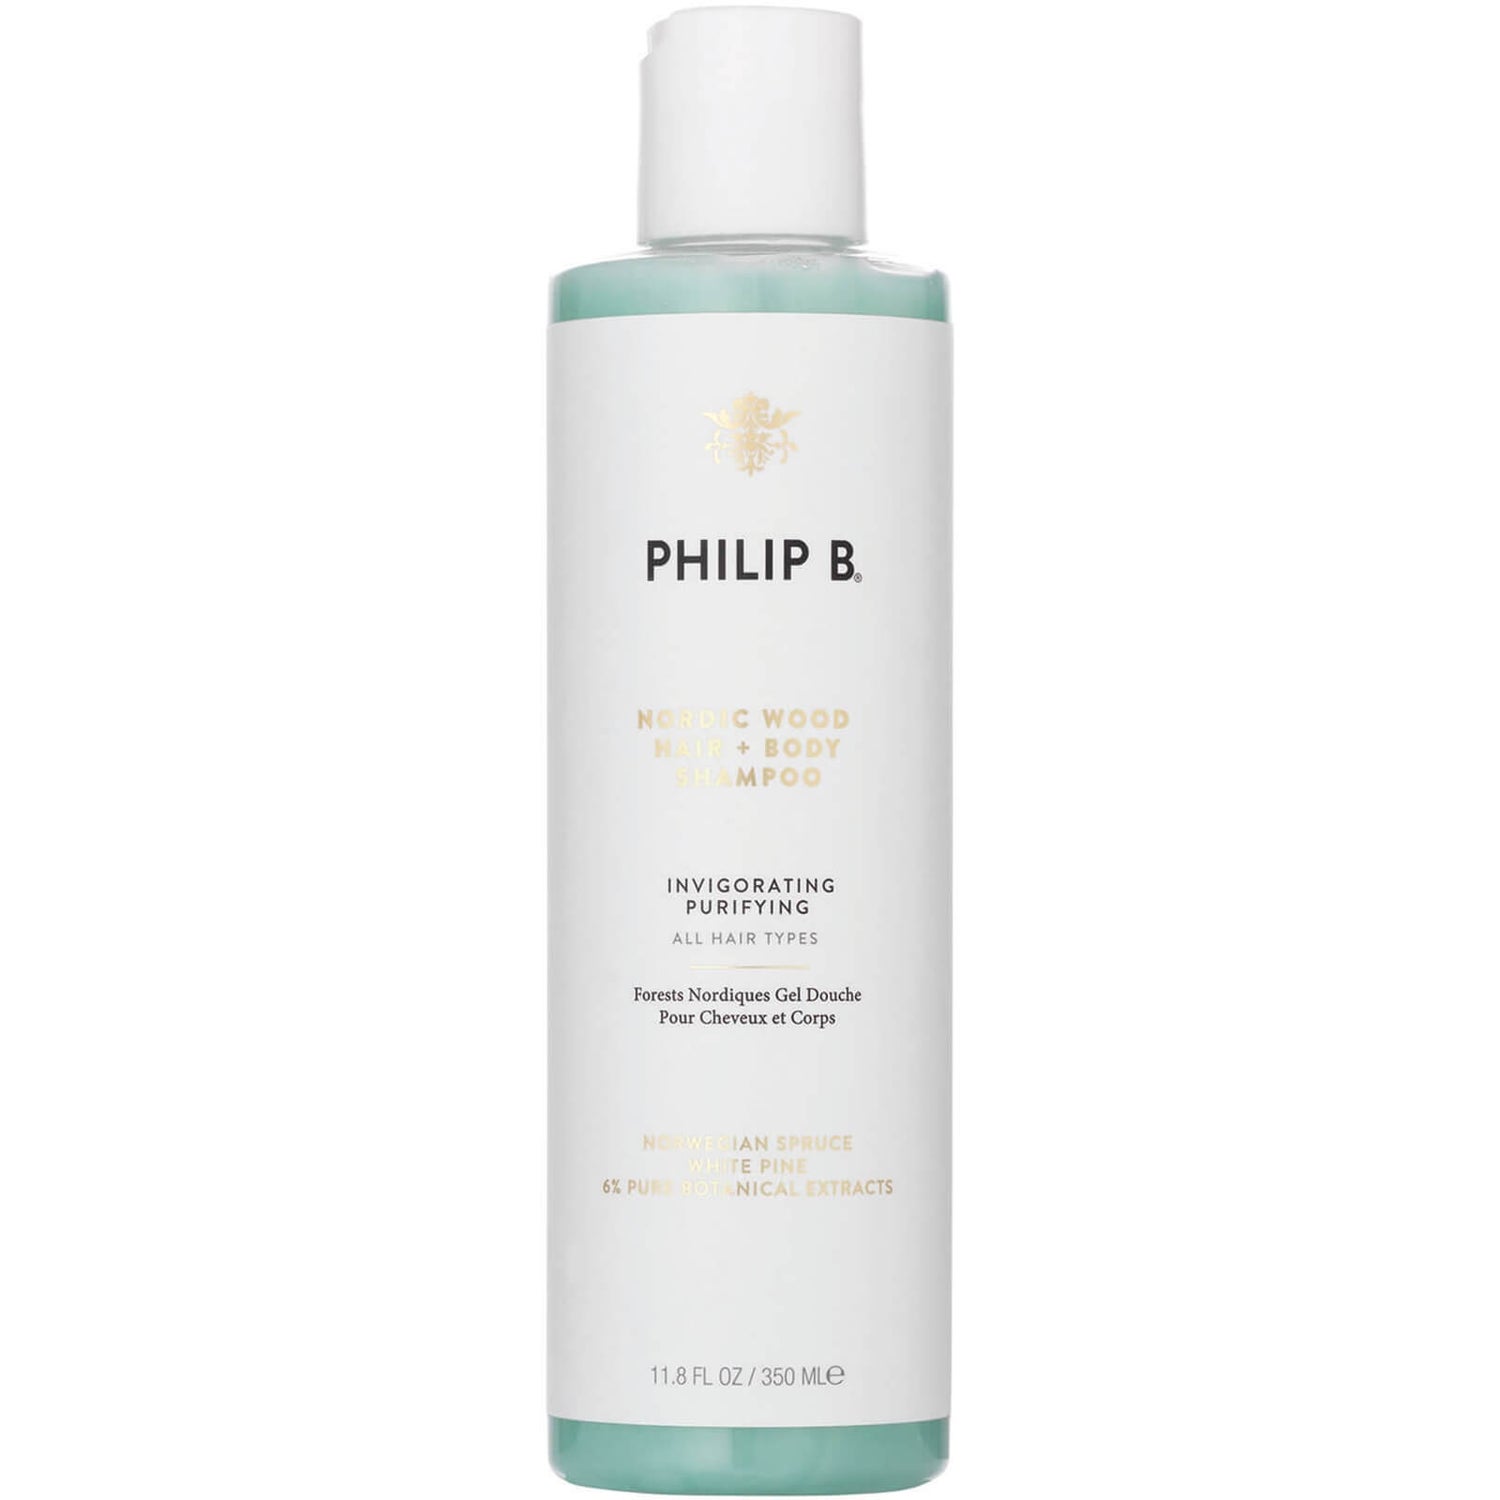 Philip B Nordic Wood Hair and Body Shampoo (350ml) (Worth $48.00)